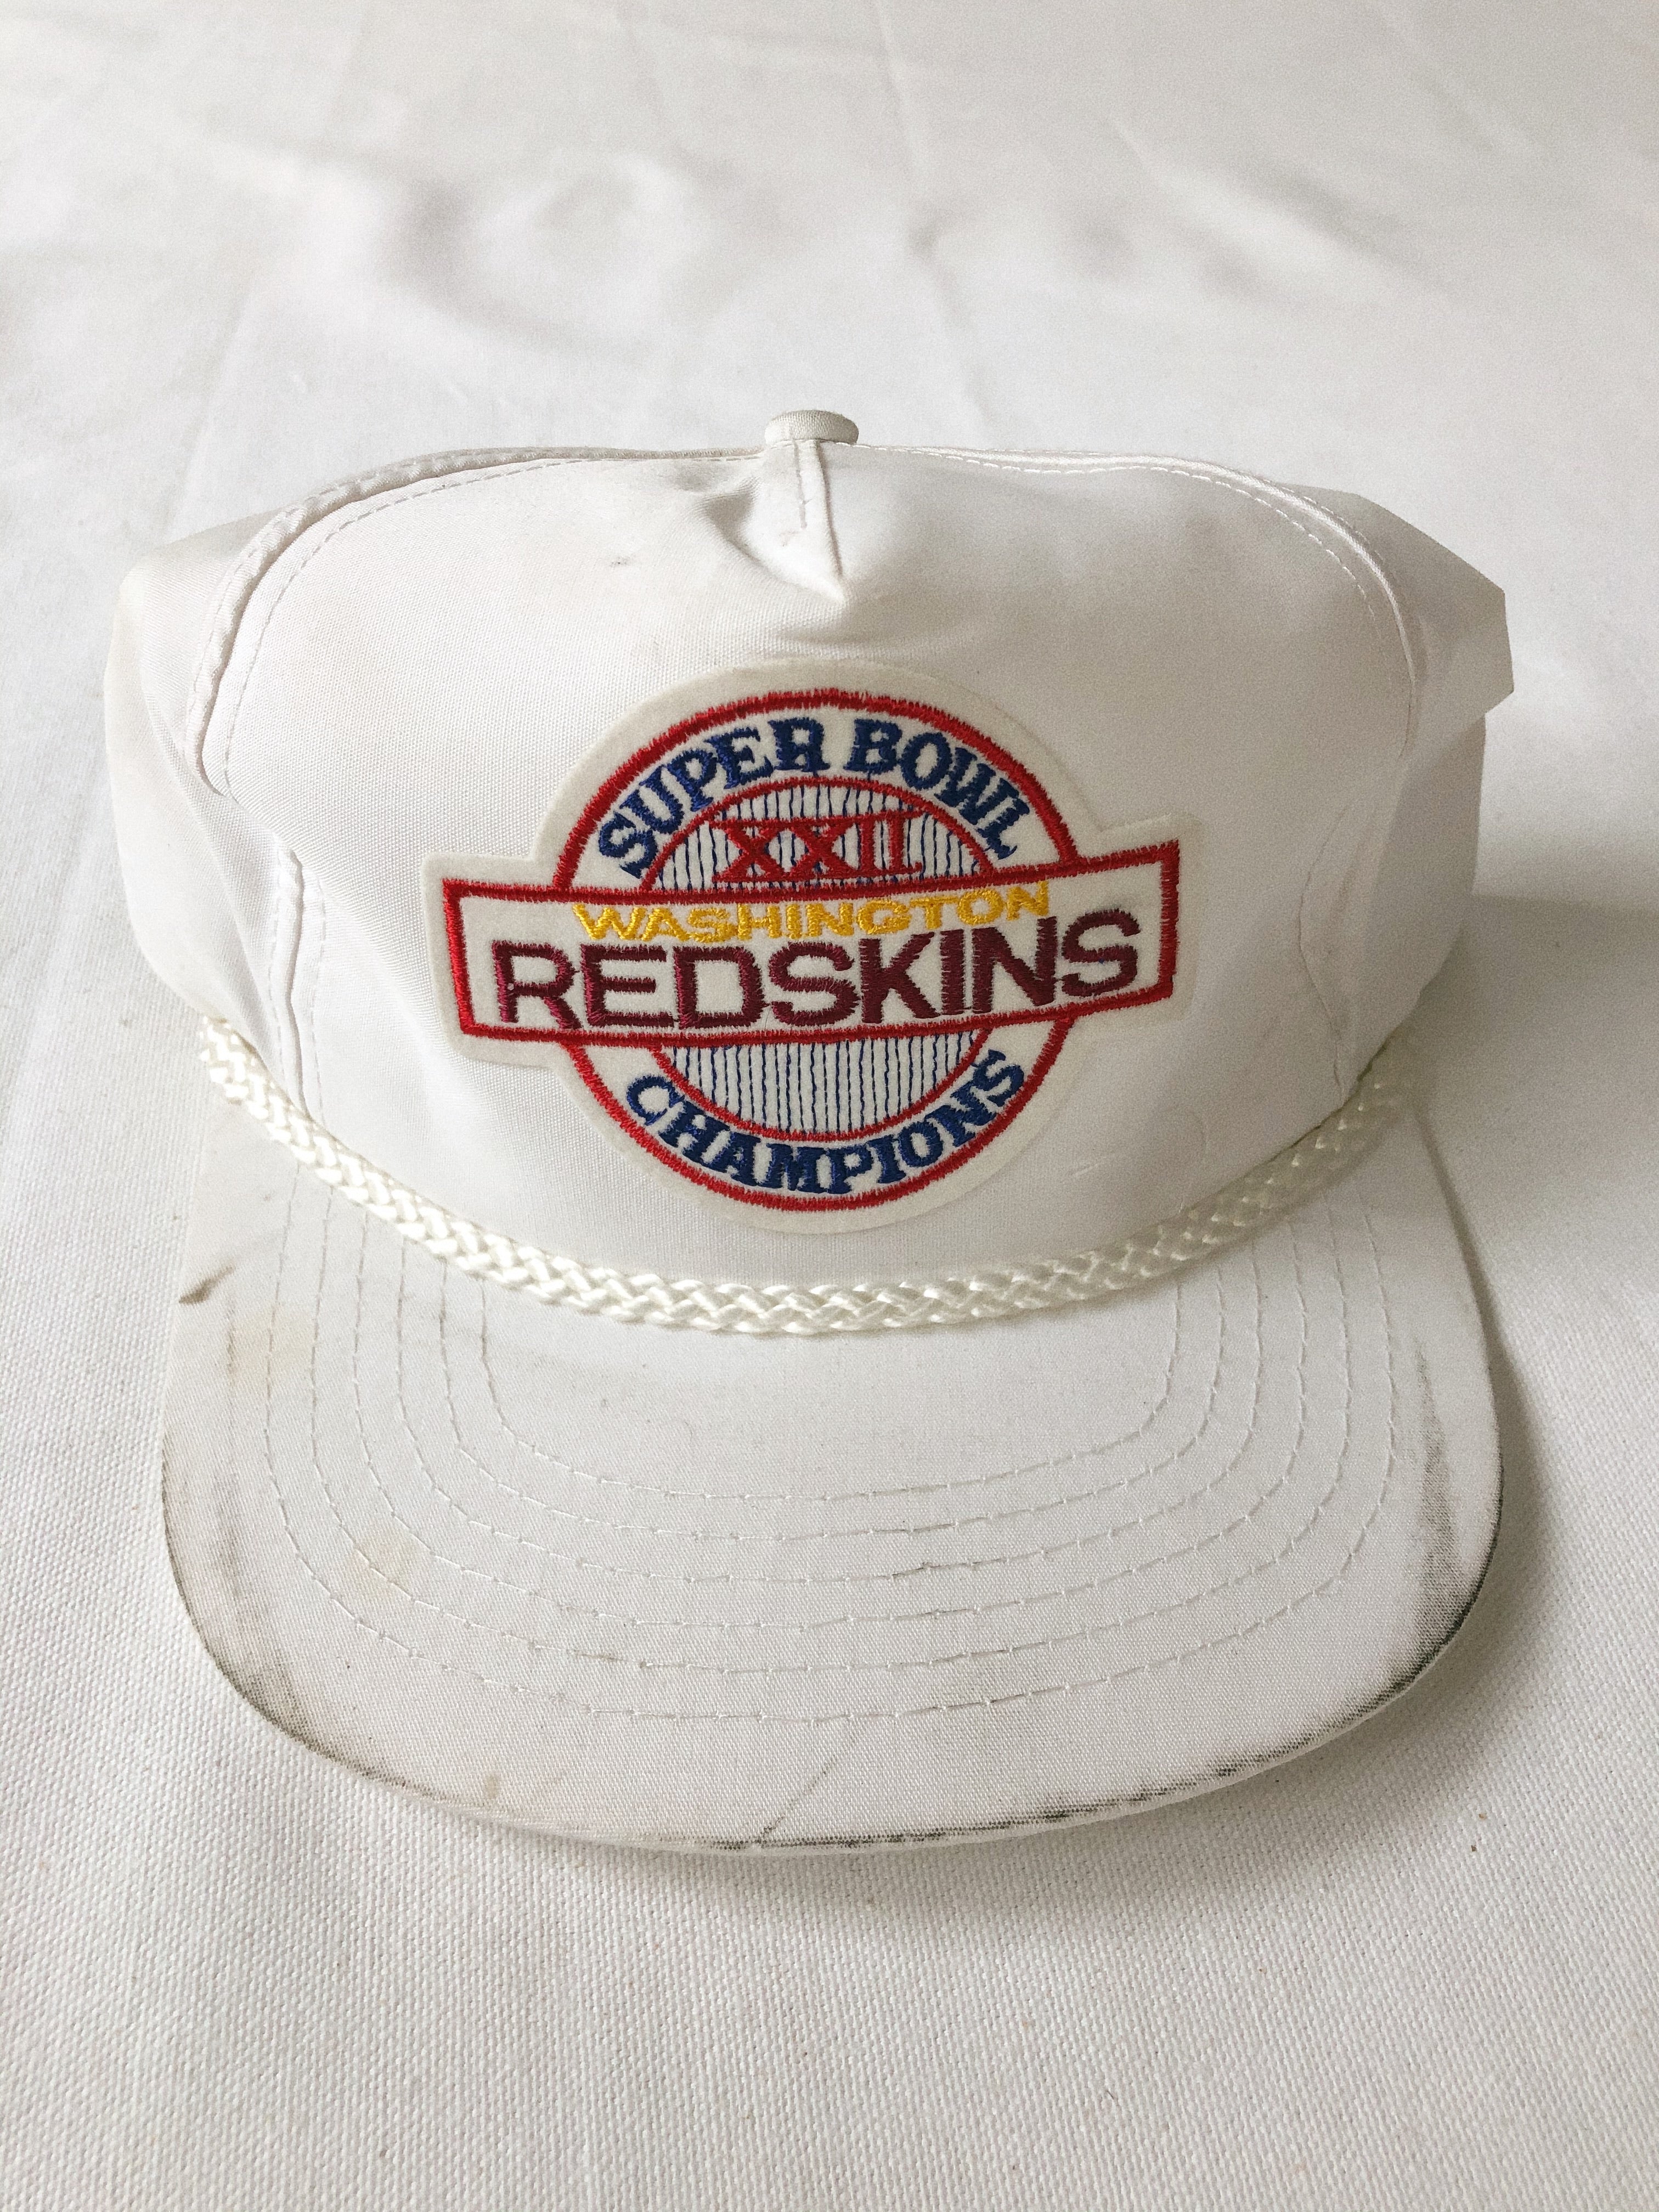 1988 Redskins Super Bowl Champions Hat – Post Graduation